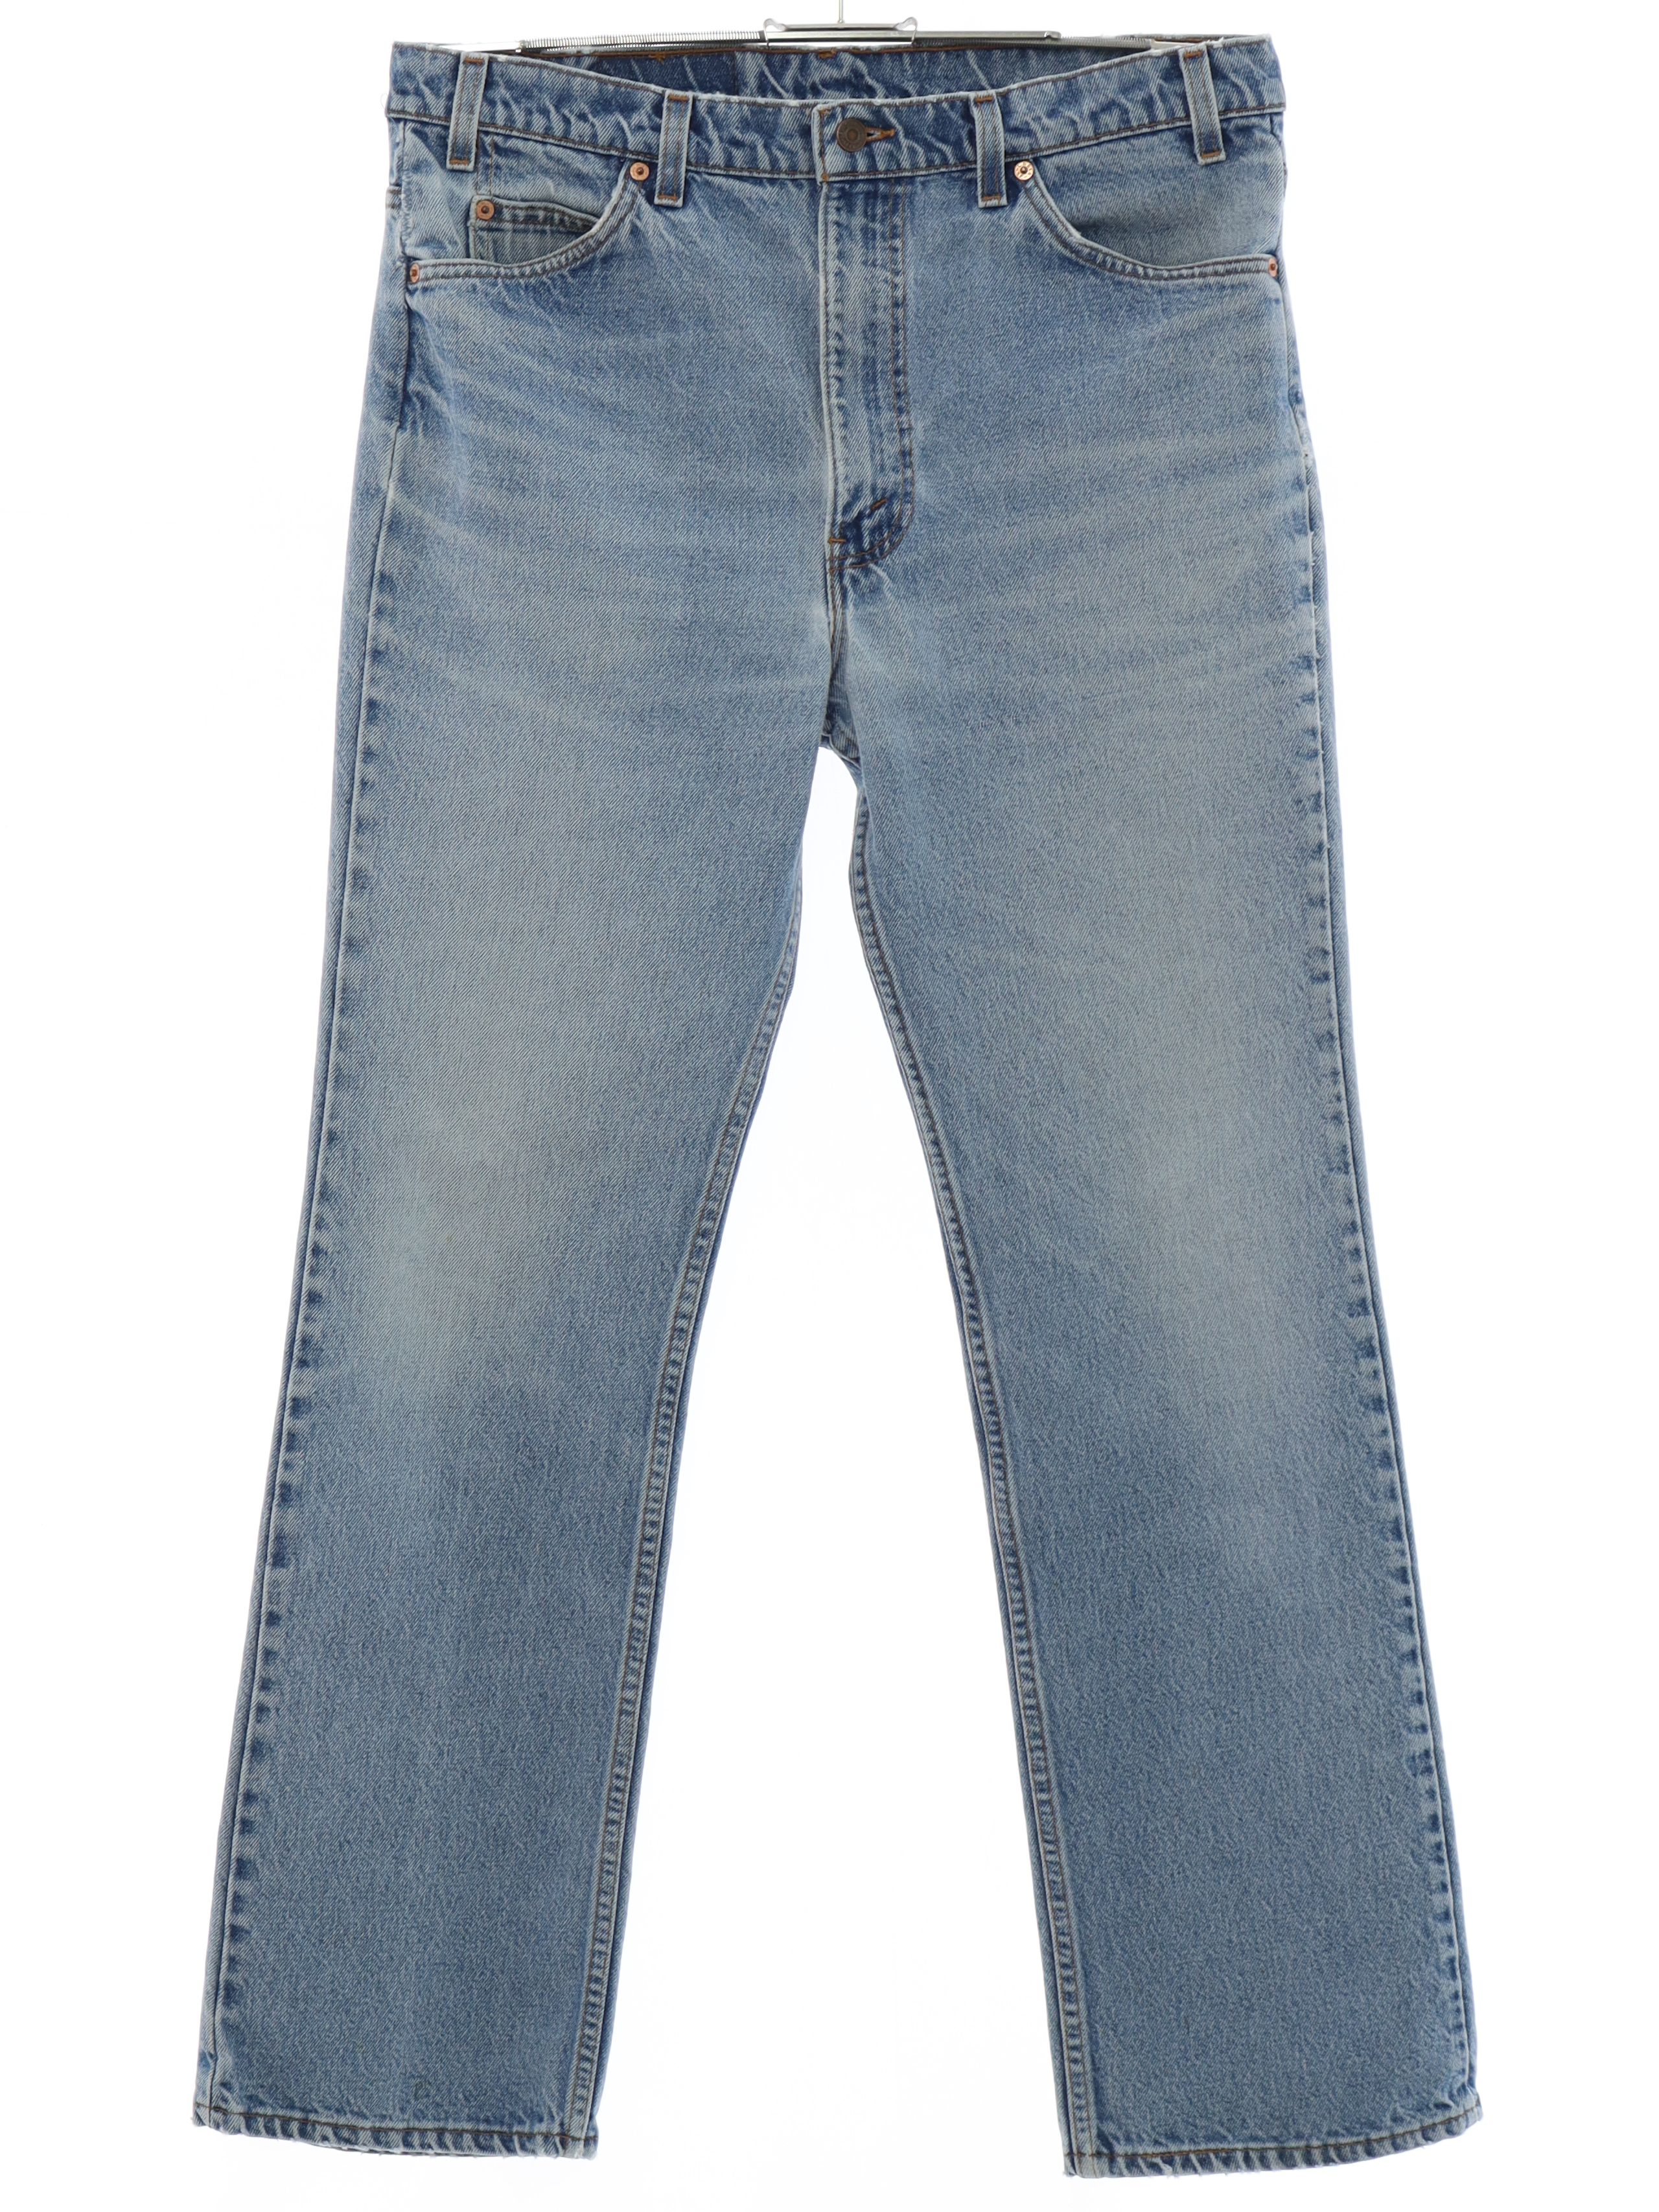 Nineties Vintage Pants: 90s (1997) -Levis 517s- Mens faded and worn ...